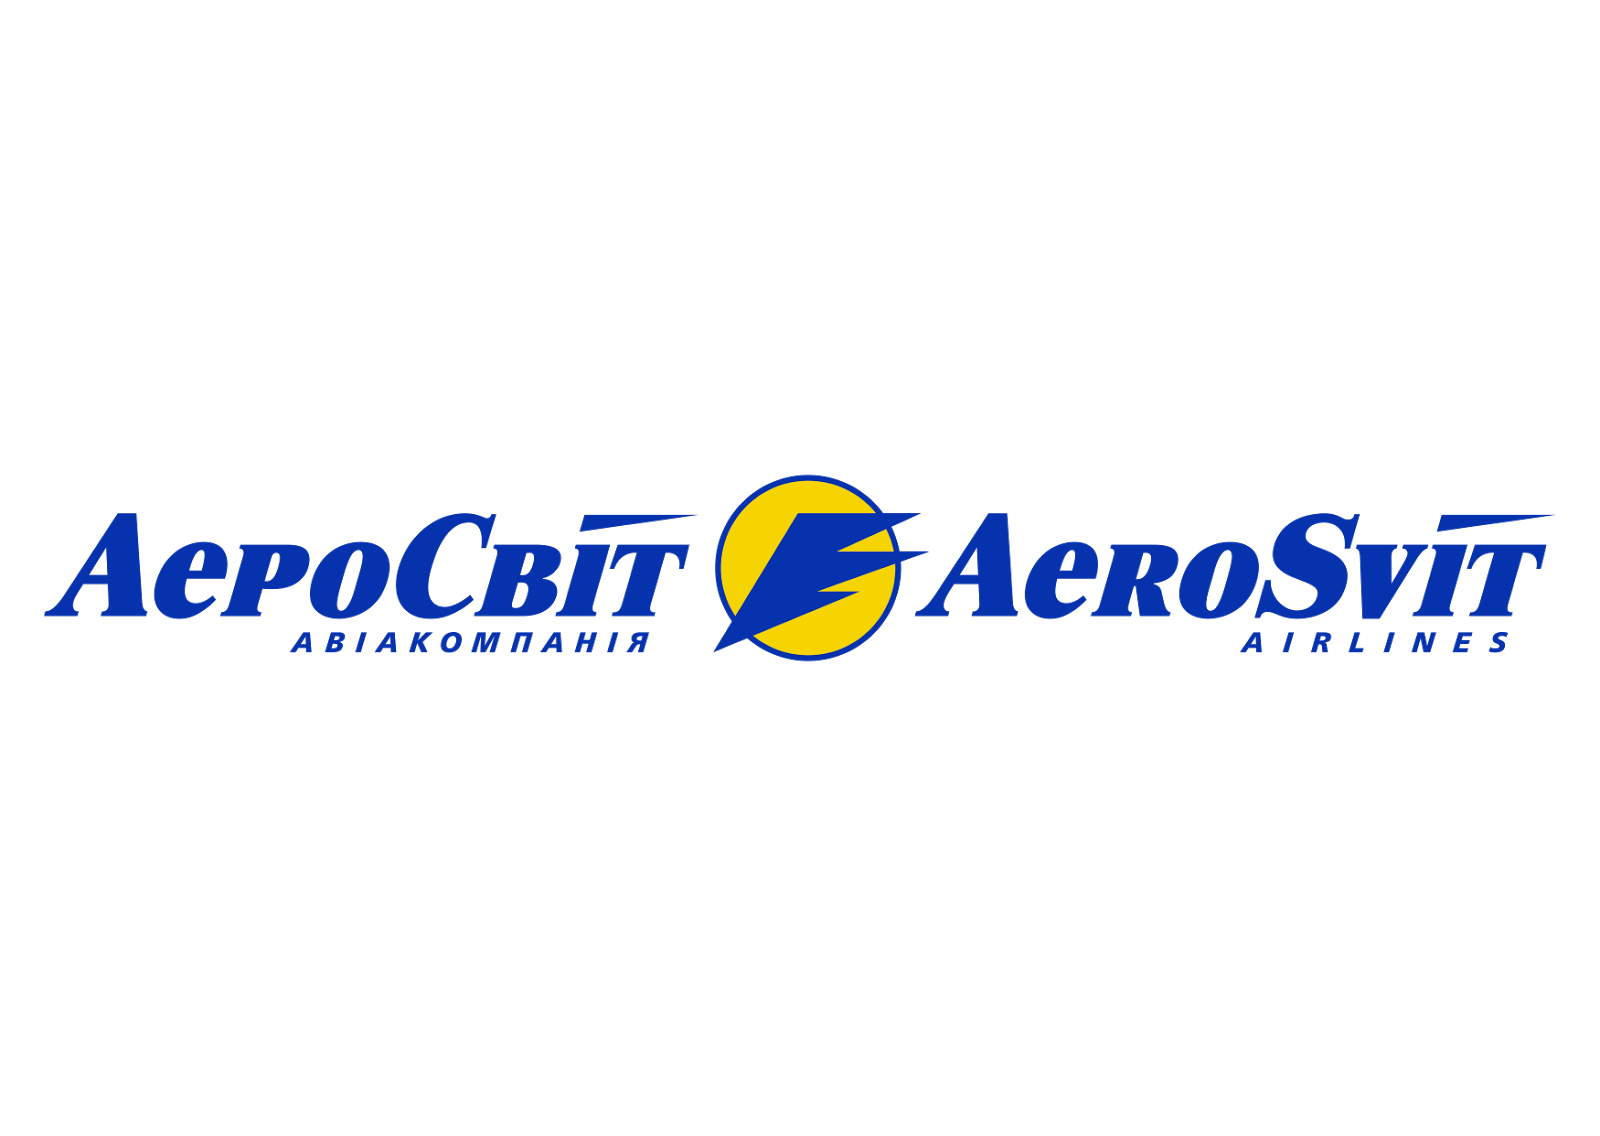 File:AeroSvit Ukrainian Airli